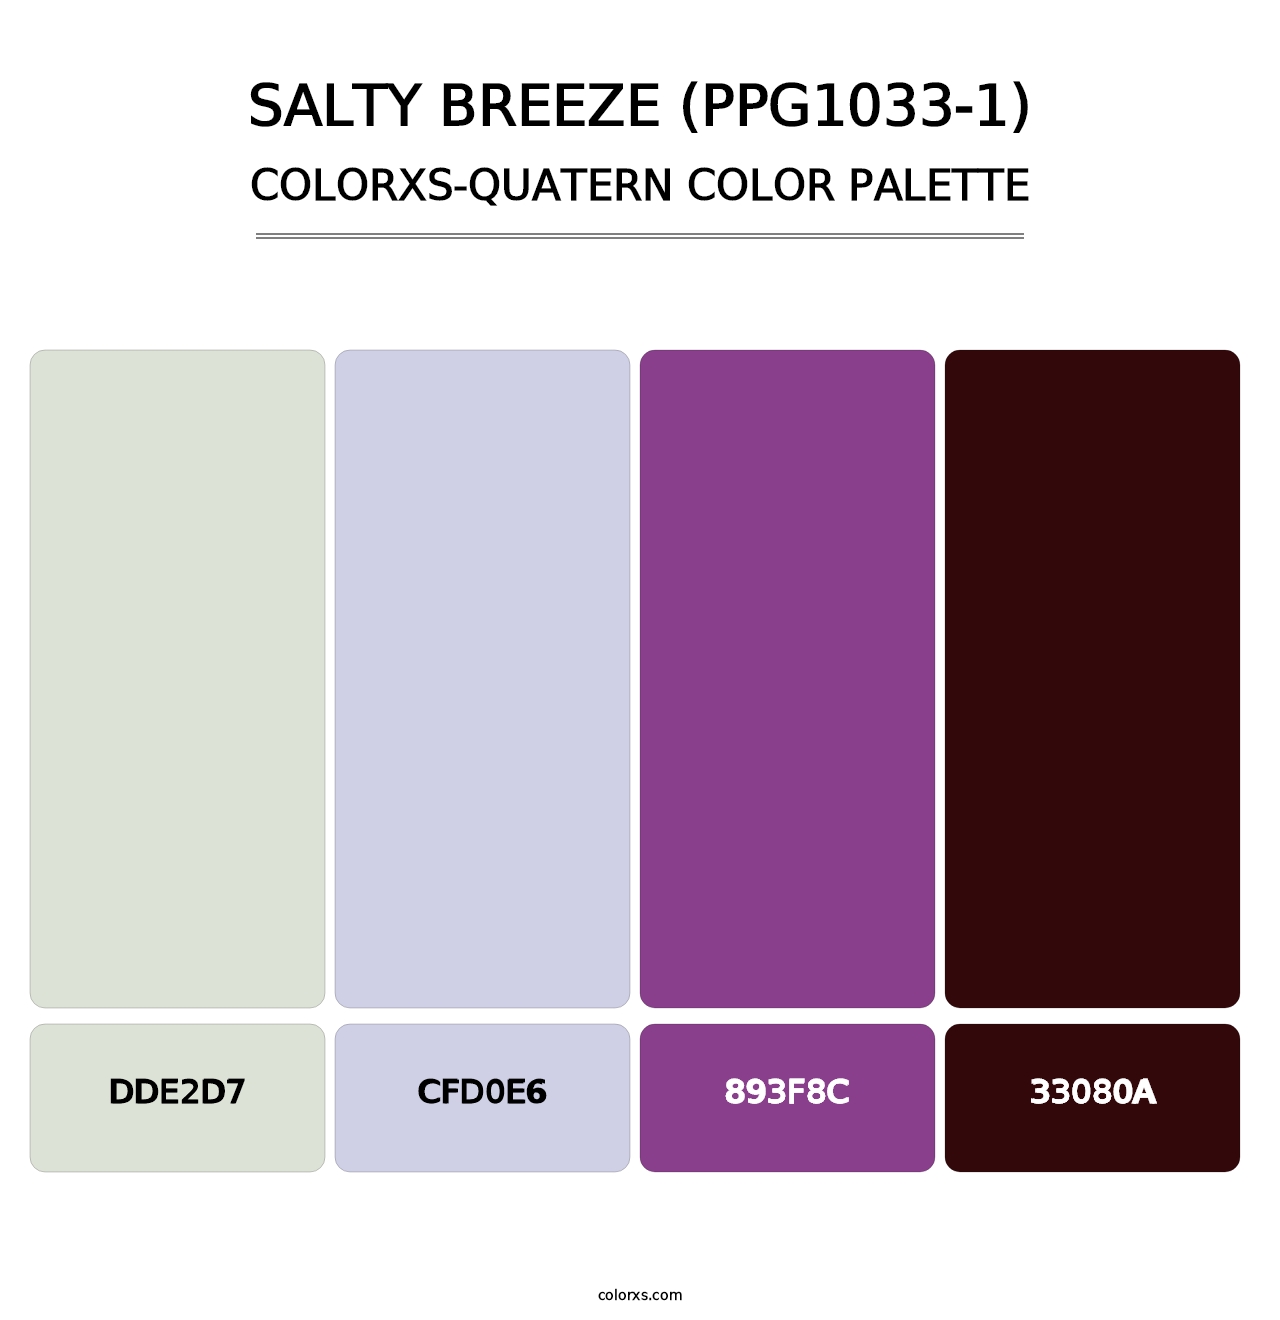 Salty Breeze (PPG1033-1) - Colorxs Quatern Palette